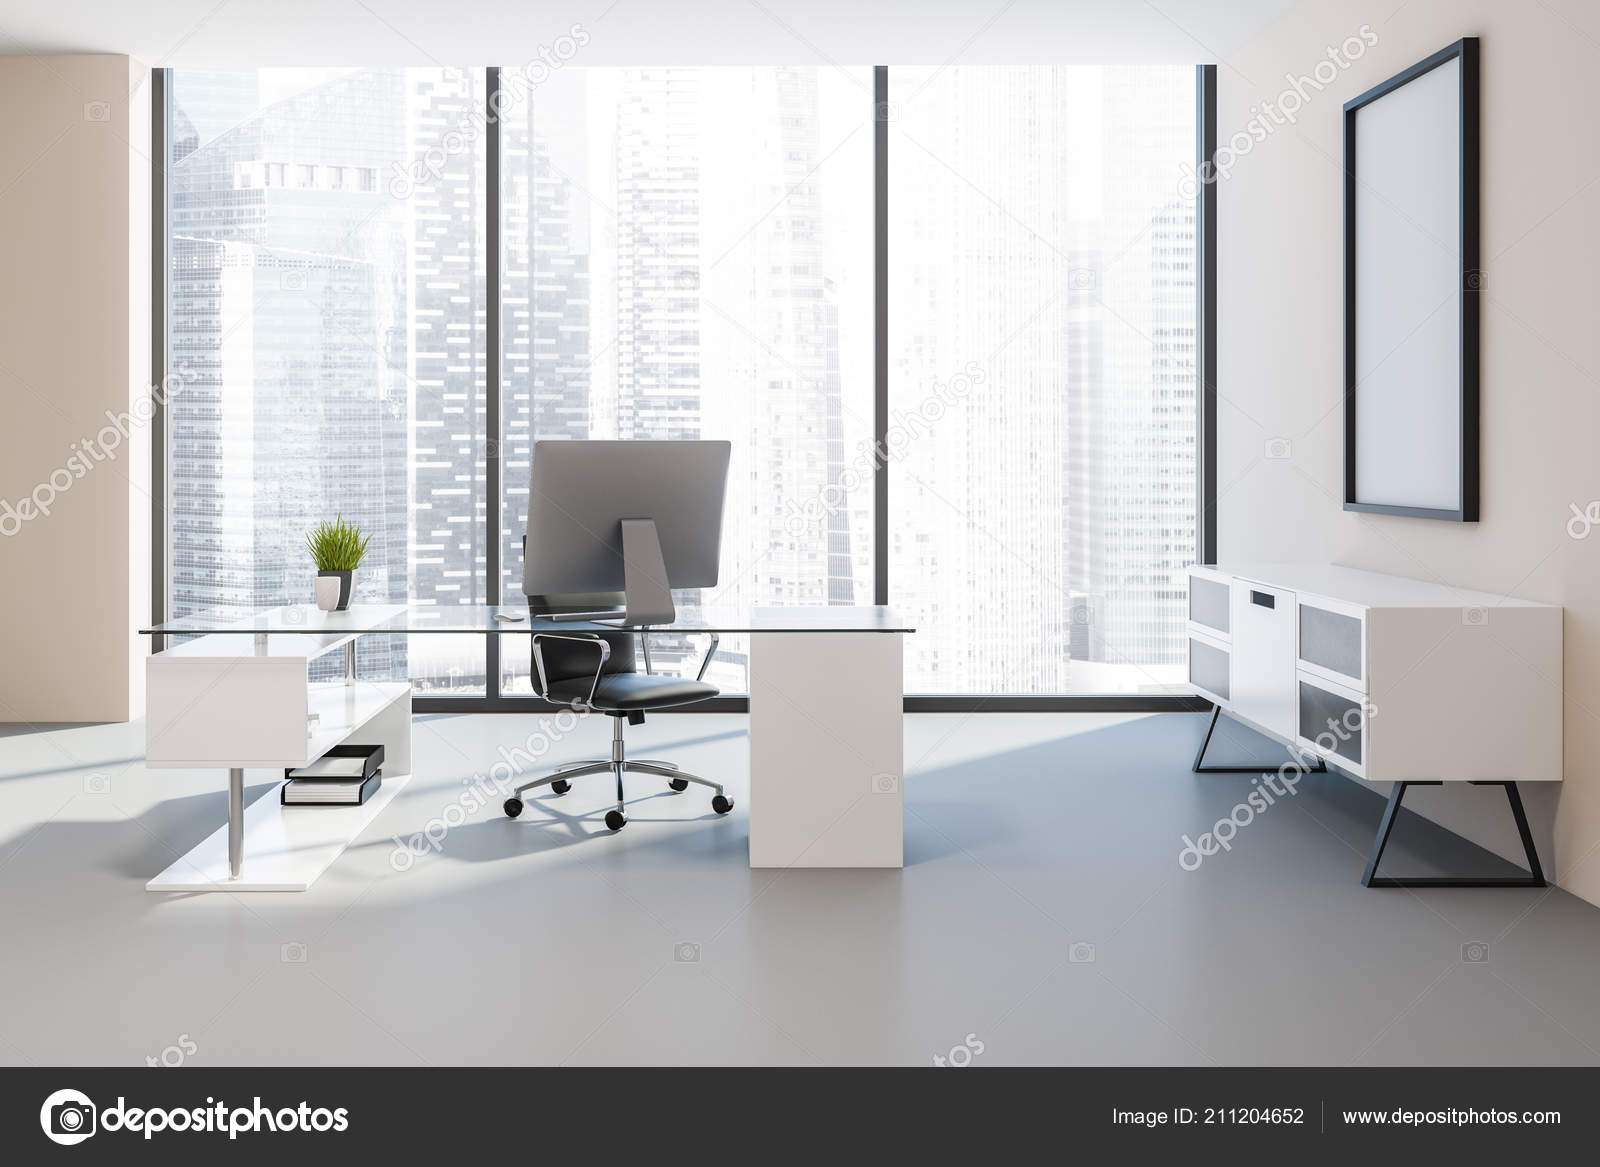 IVM - Italian high quality executive office desk Athos, attorney desk